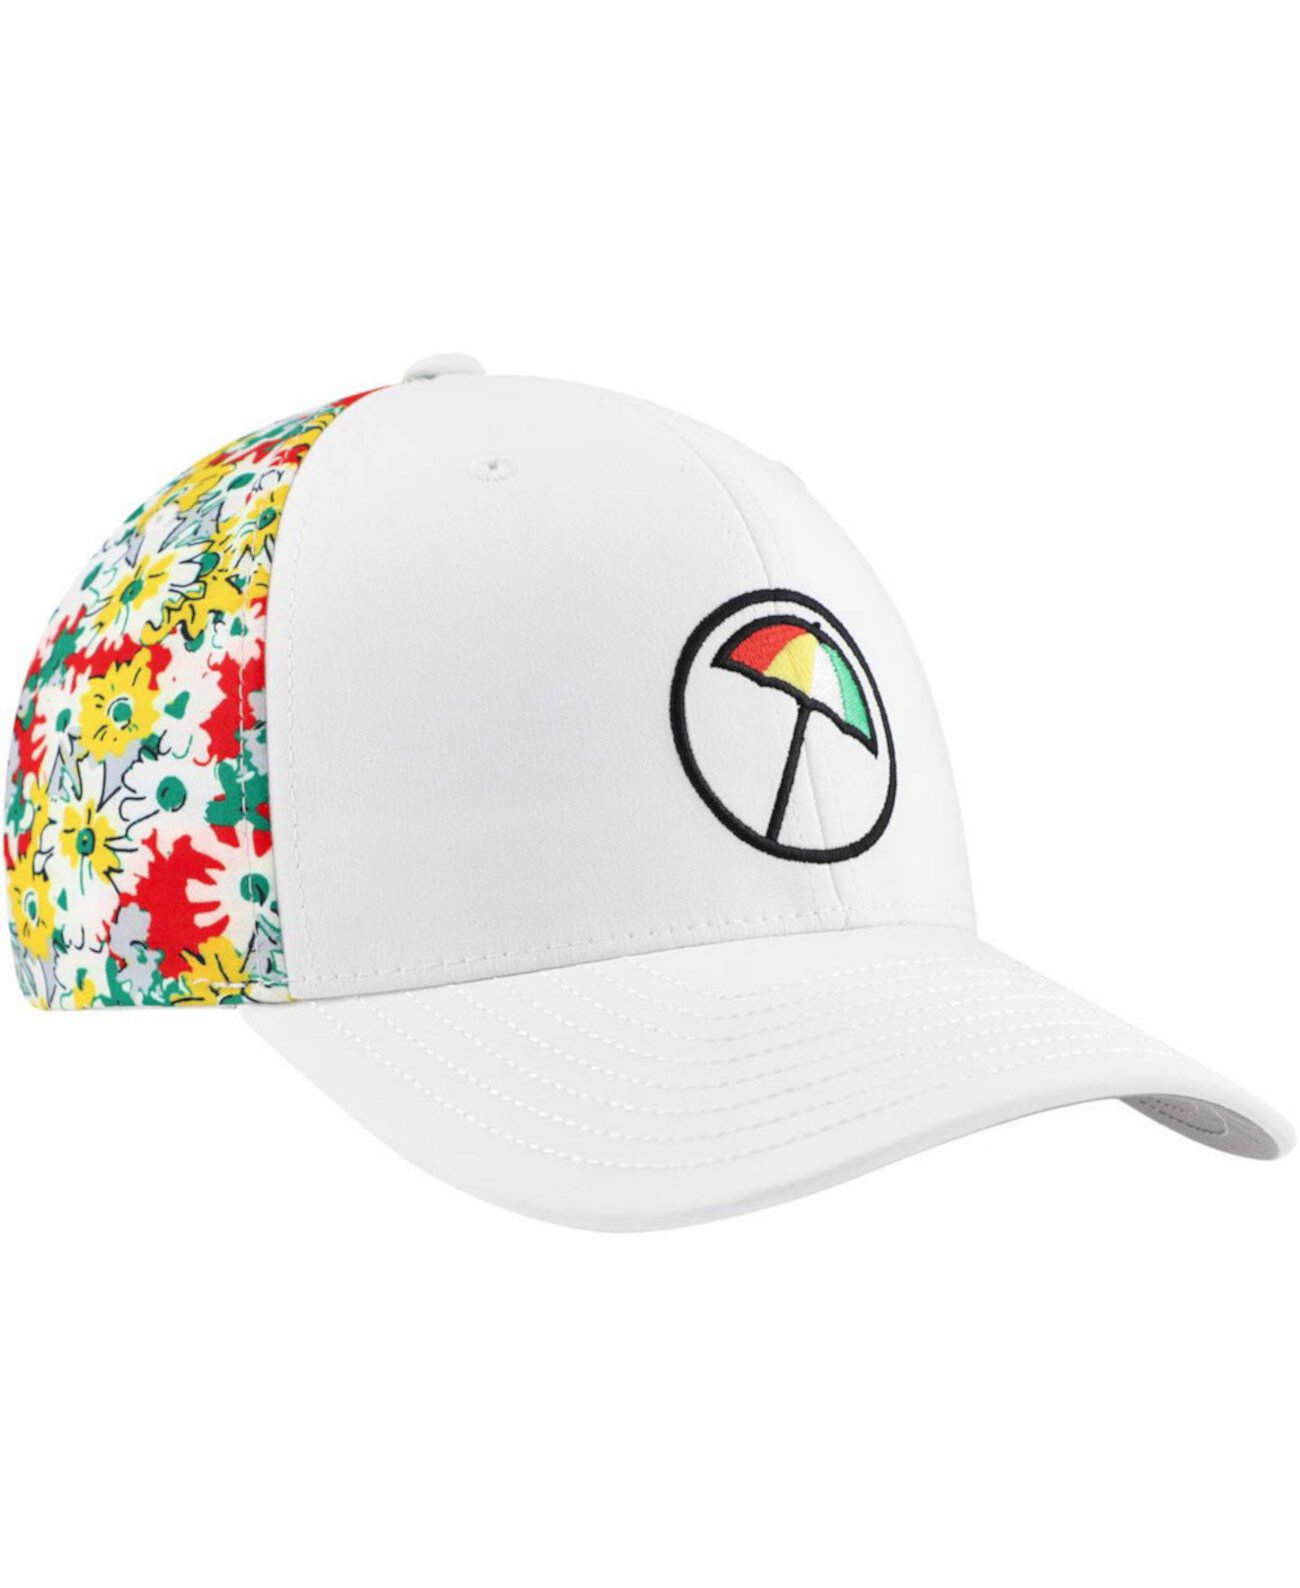 Men's White Arnold Palmer Invitational Floral Tech Flexfit Adjustable Hat PUMA